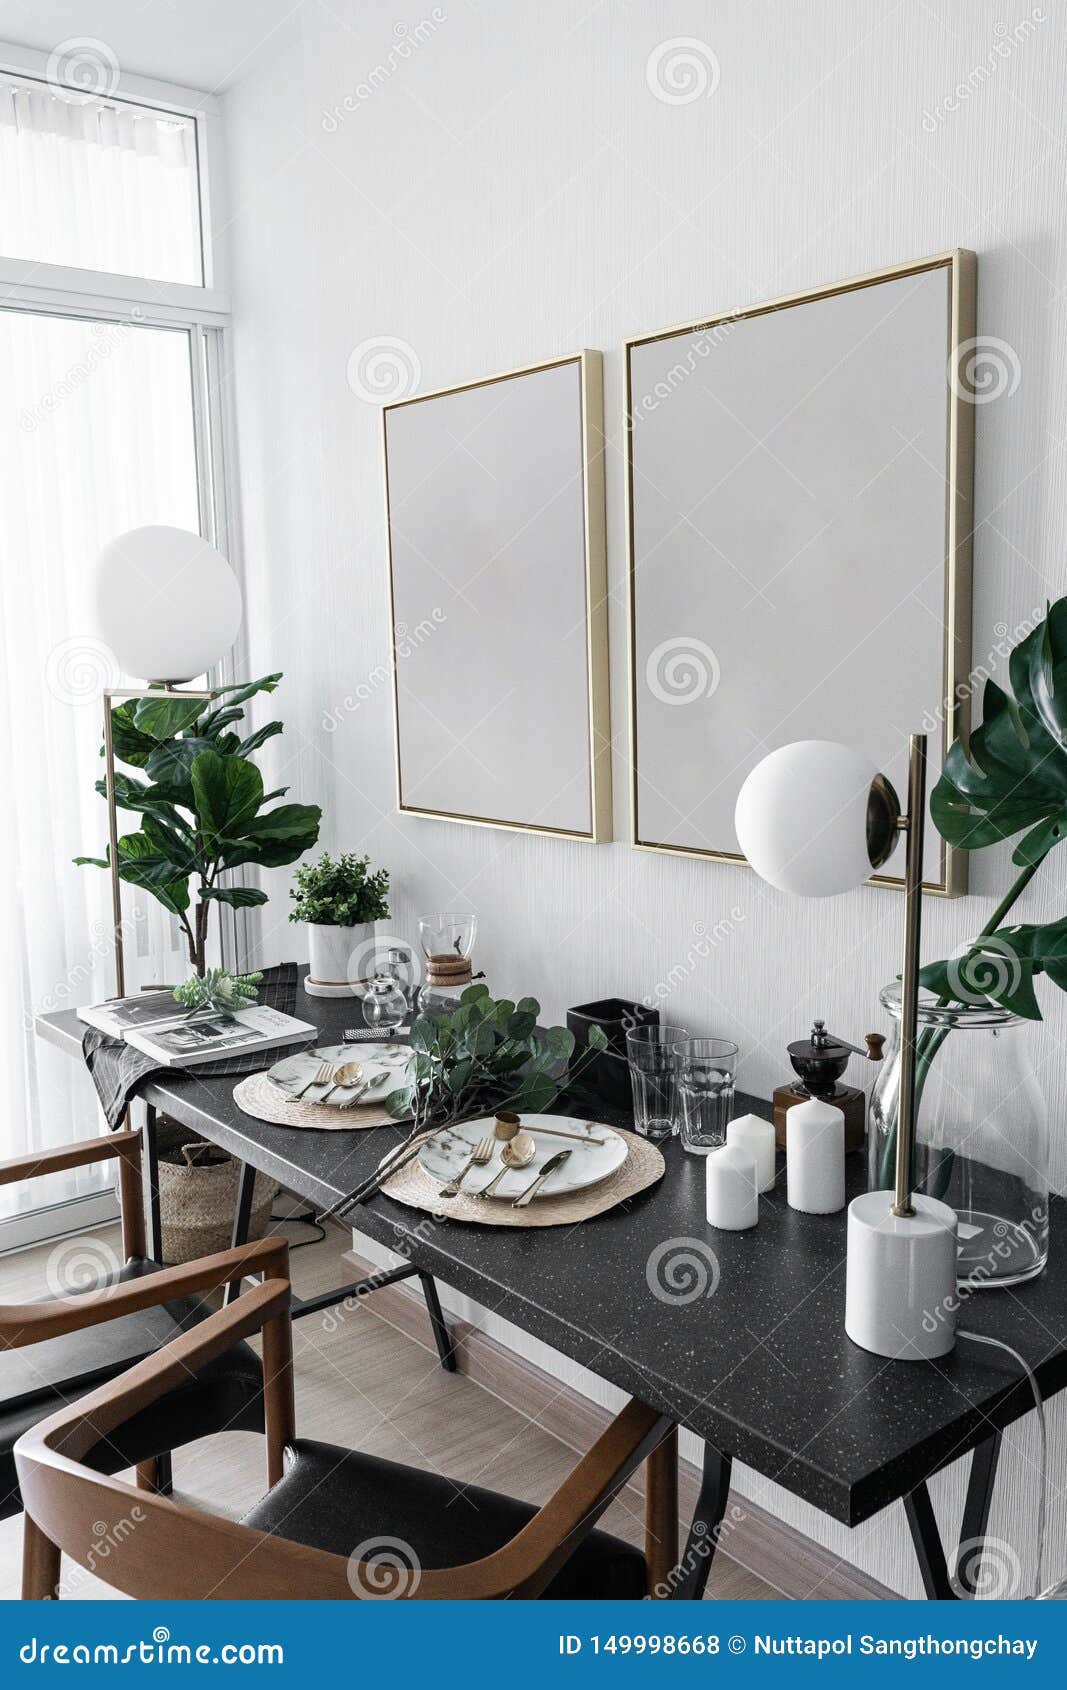 Cozy Dining Corner With Nice Decoration In Scandinavian